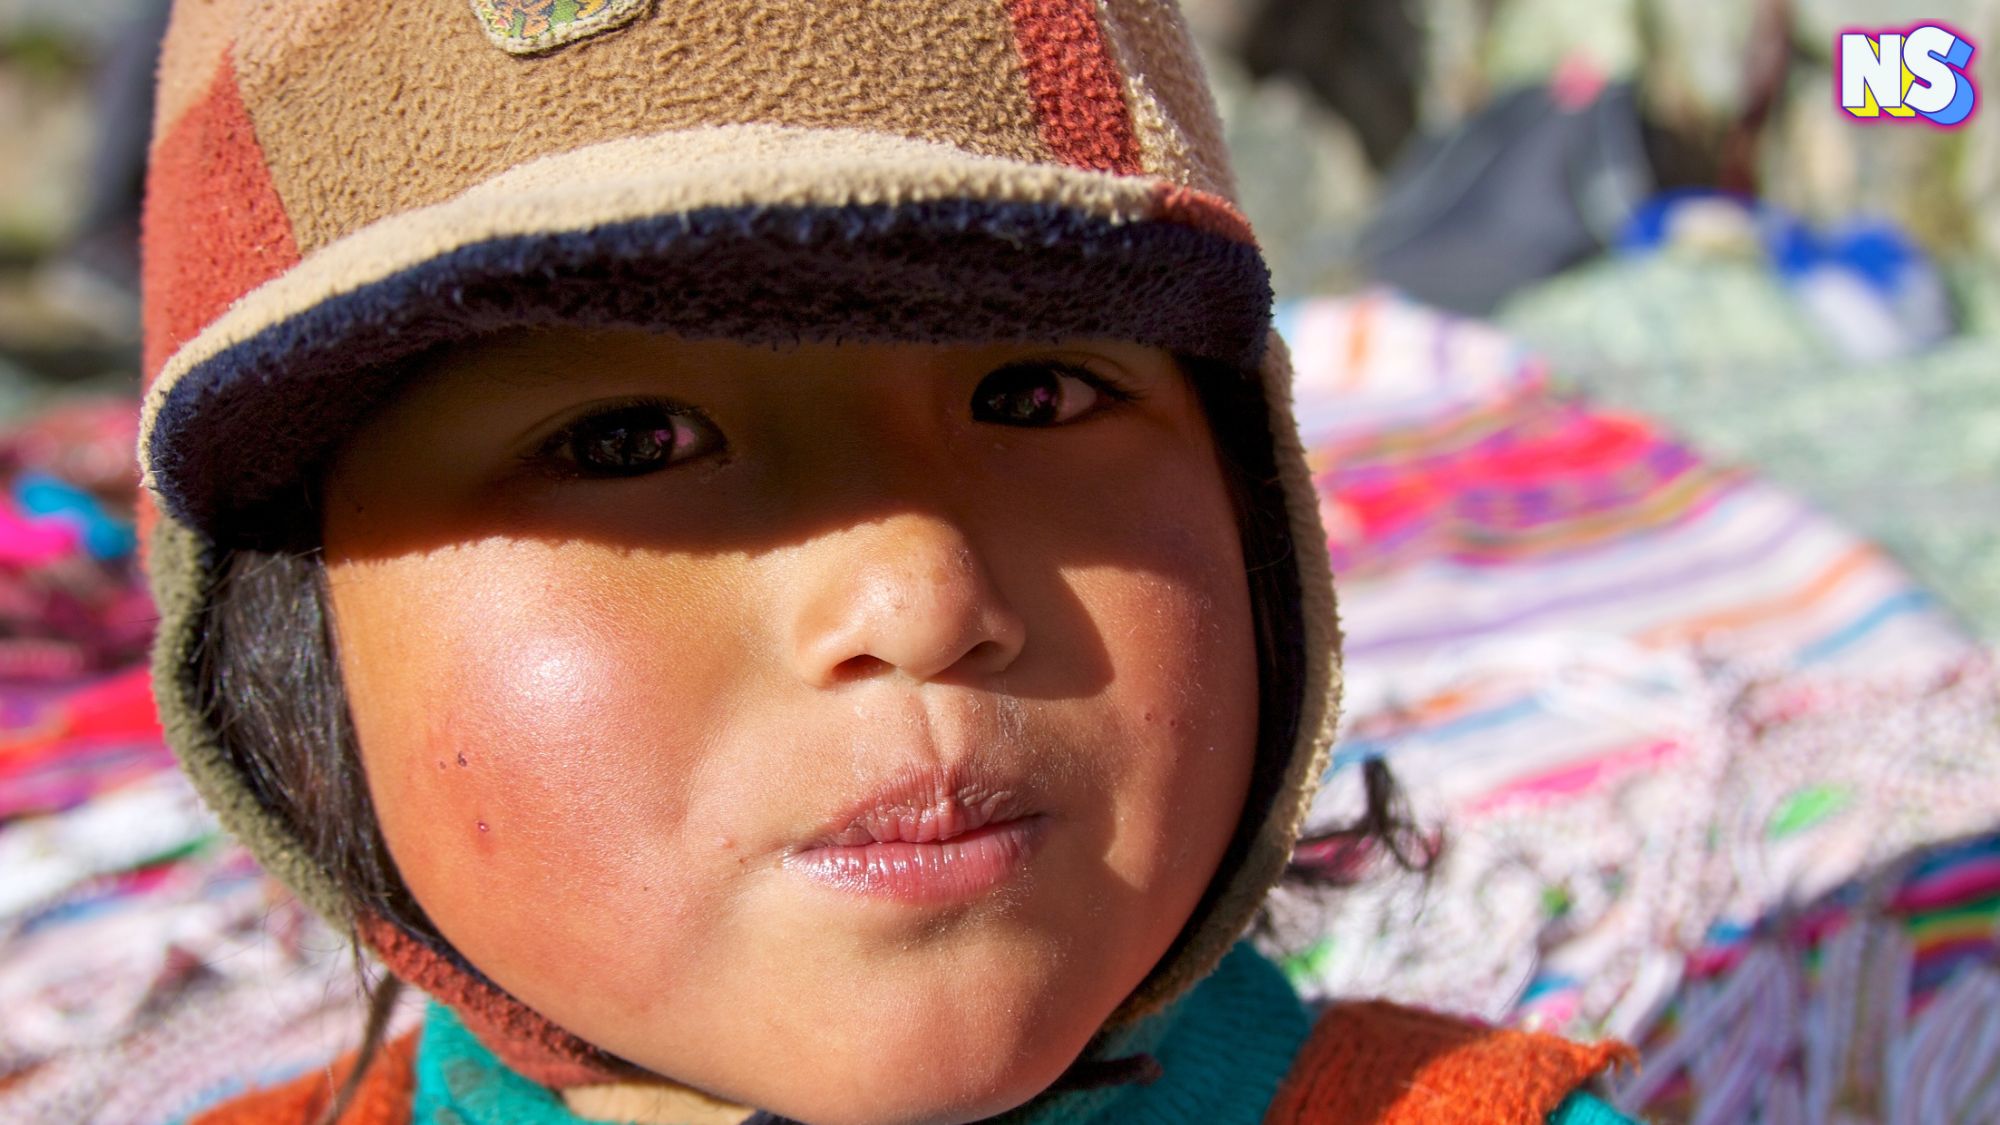 Featured image: "Peru - Salkantay Trek 034" Curious Quechua boy.